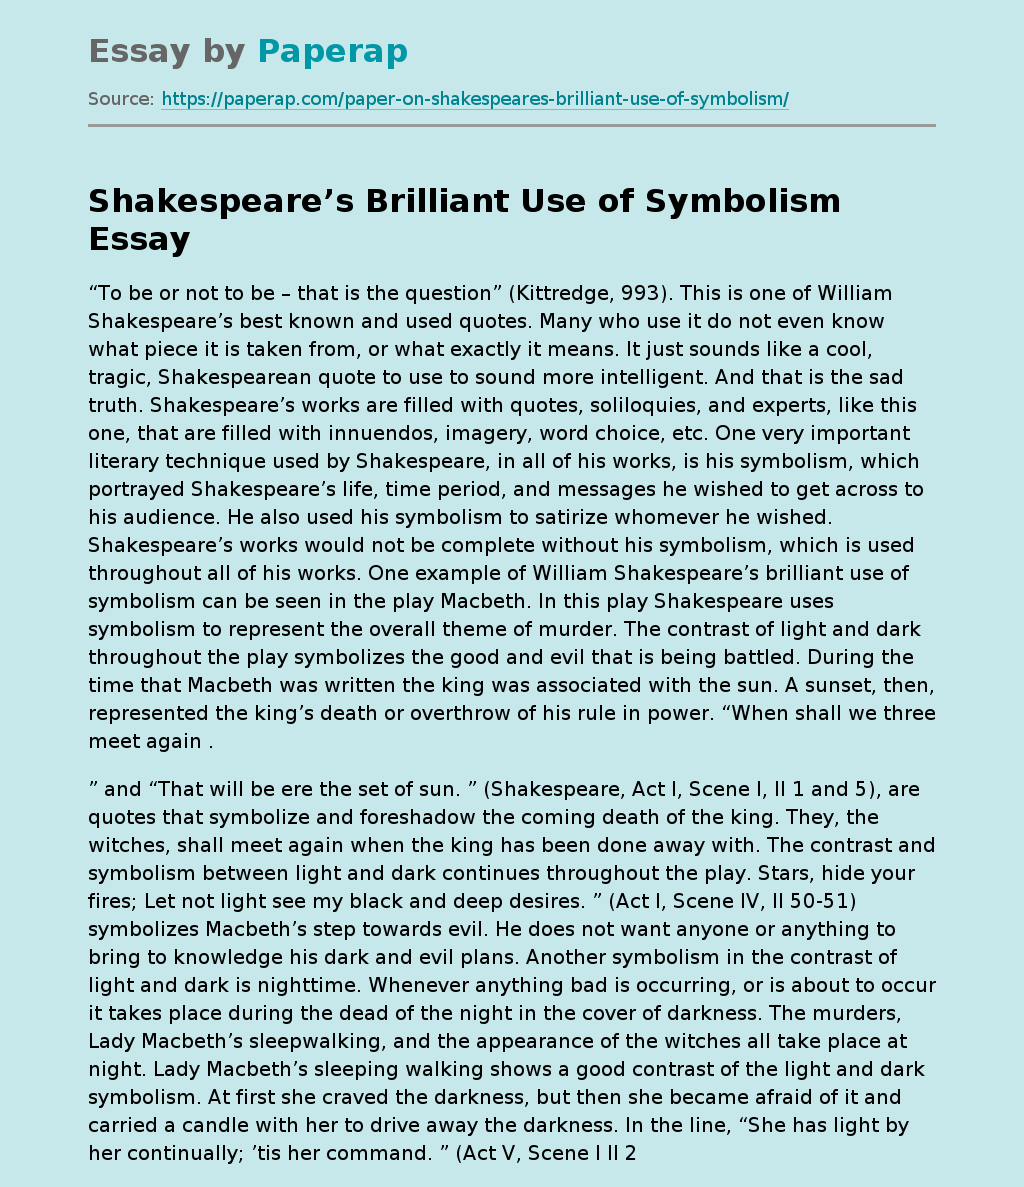 Shakespeare’s Brilliant Use of Symbolism